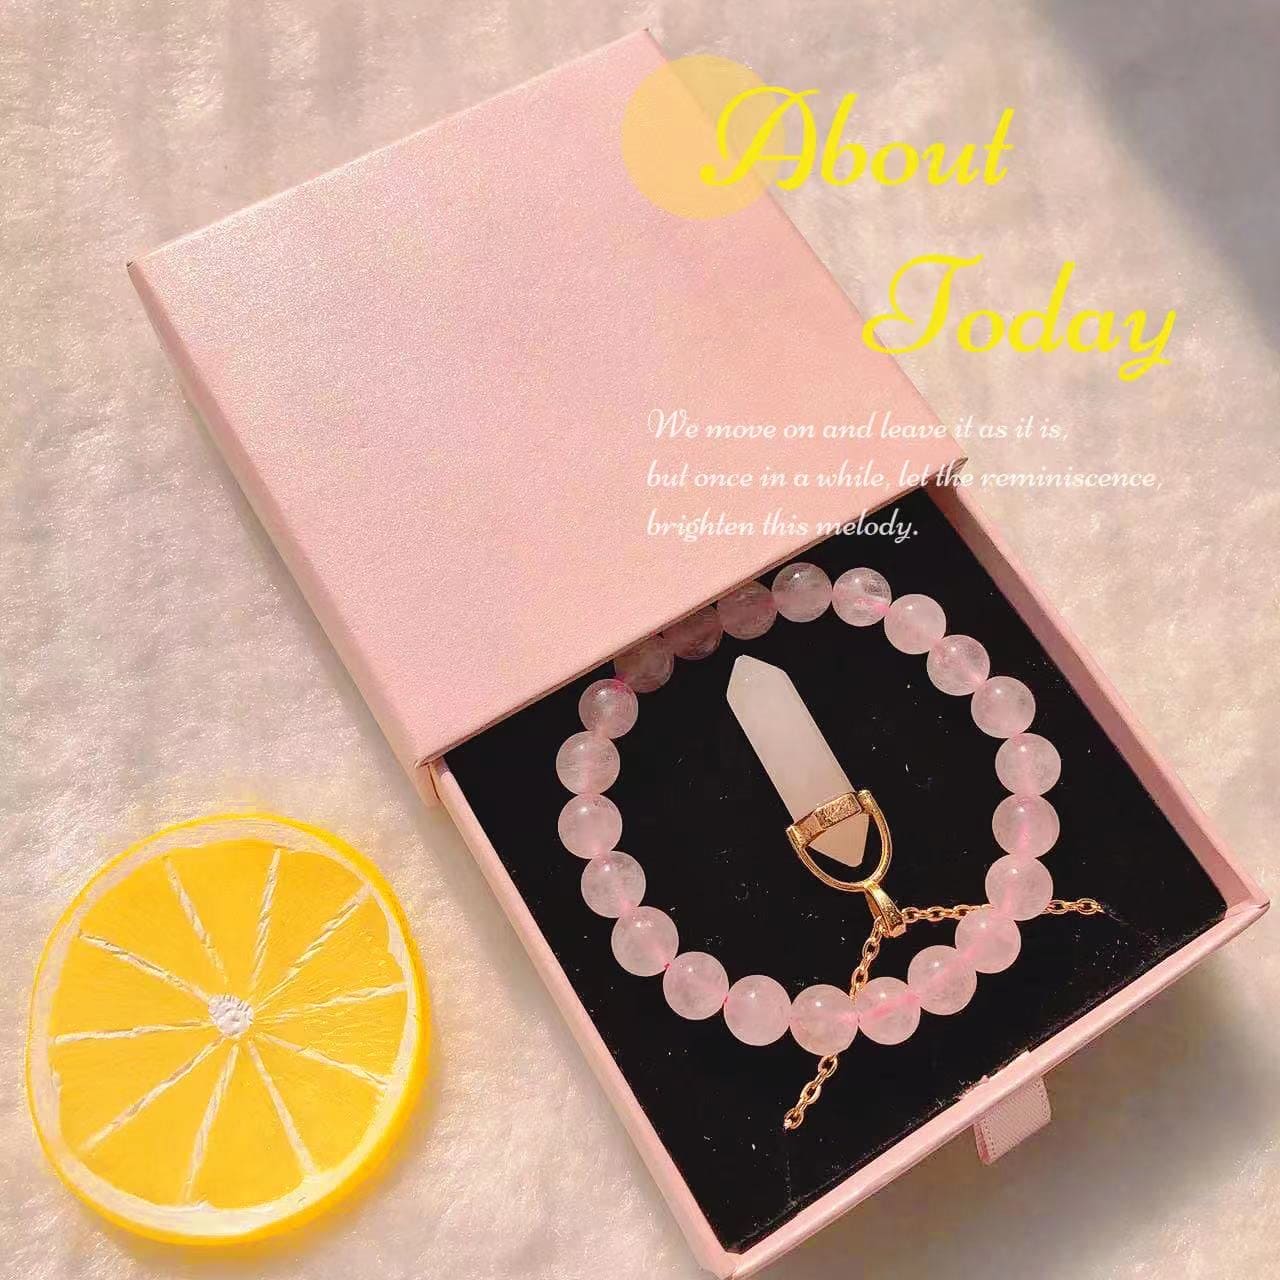 2 Pieces of Pink Crystal Set Healing Crystal Yoga Rose Shi Ying Bracelet-Rose Shi Ying Necklace